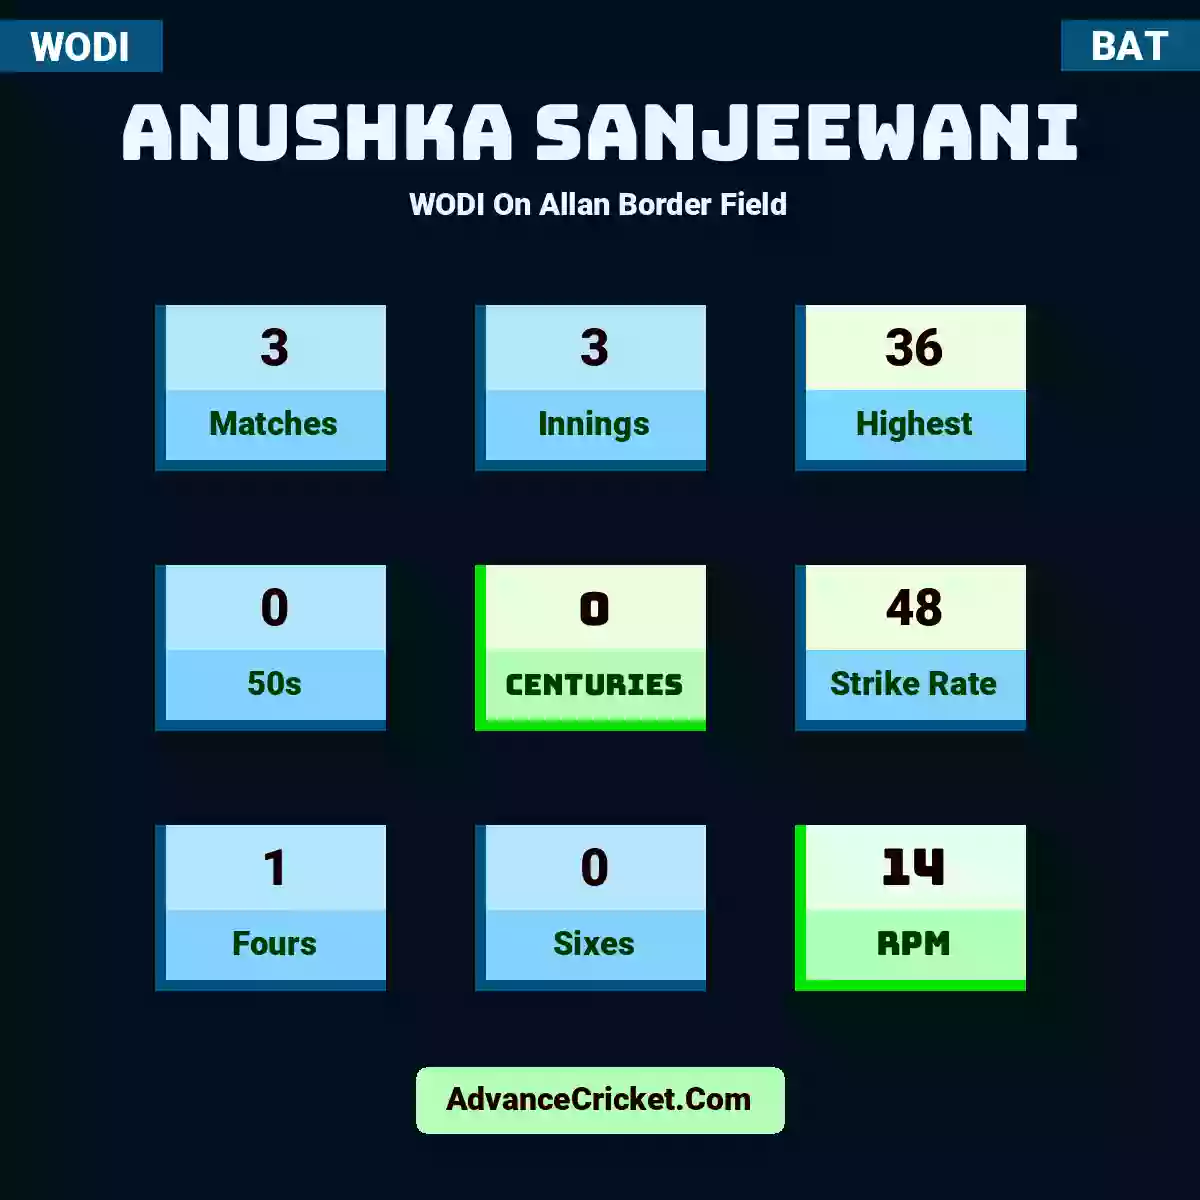 Anushka Sanjeewani WODI  On Allan Border Field, Anushka Sanjeewani played 3 matches, scored 36 runs as highest, 0 half-centuries, and 0 centuries, with a strike rate of 48. A.Sanjeewani hit 1 fours and 0 sixes, with an RPM of 14.